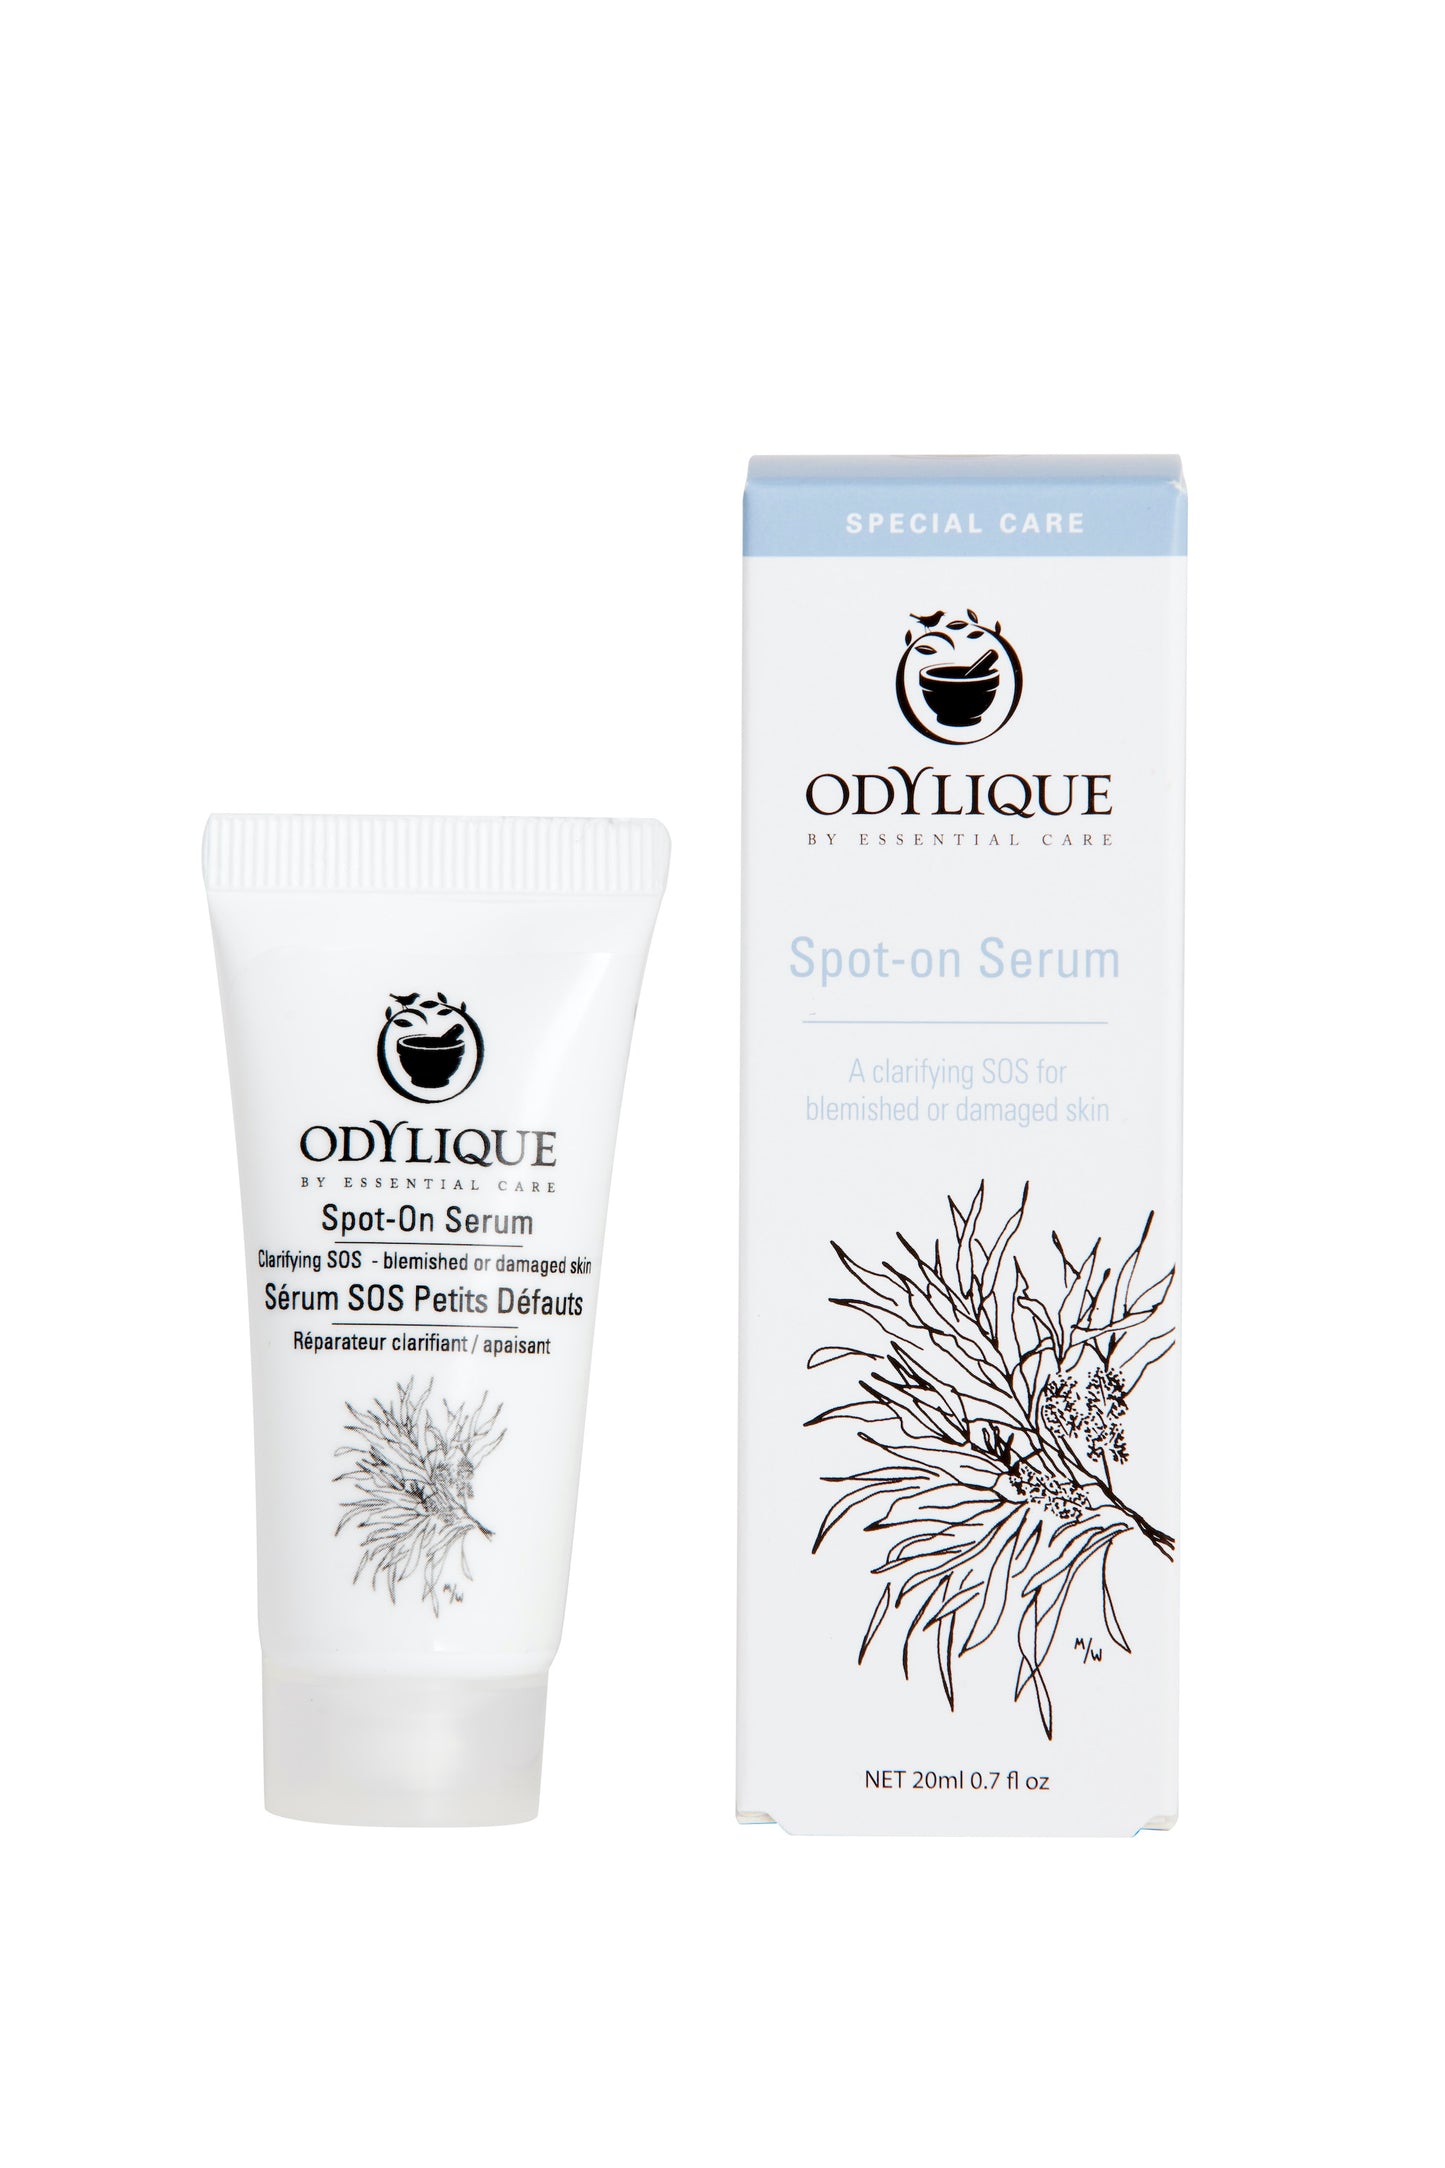 Odylique Spot-On Serum for acne, burns or damaged skin. Organic remedies